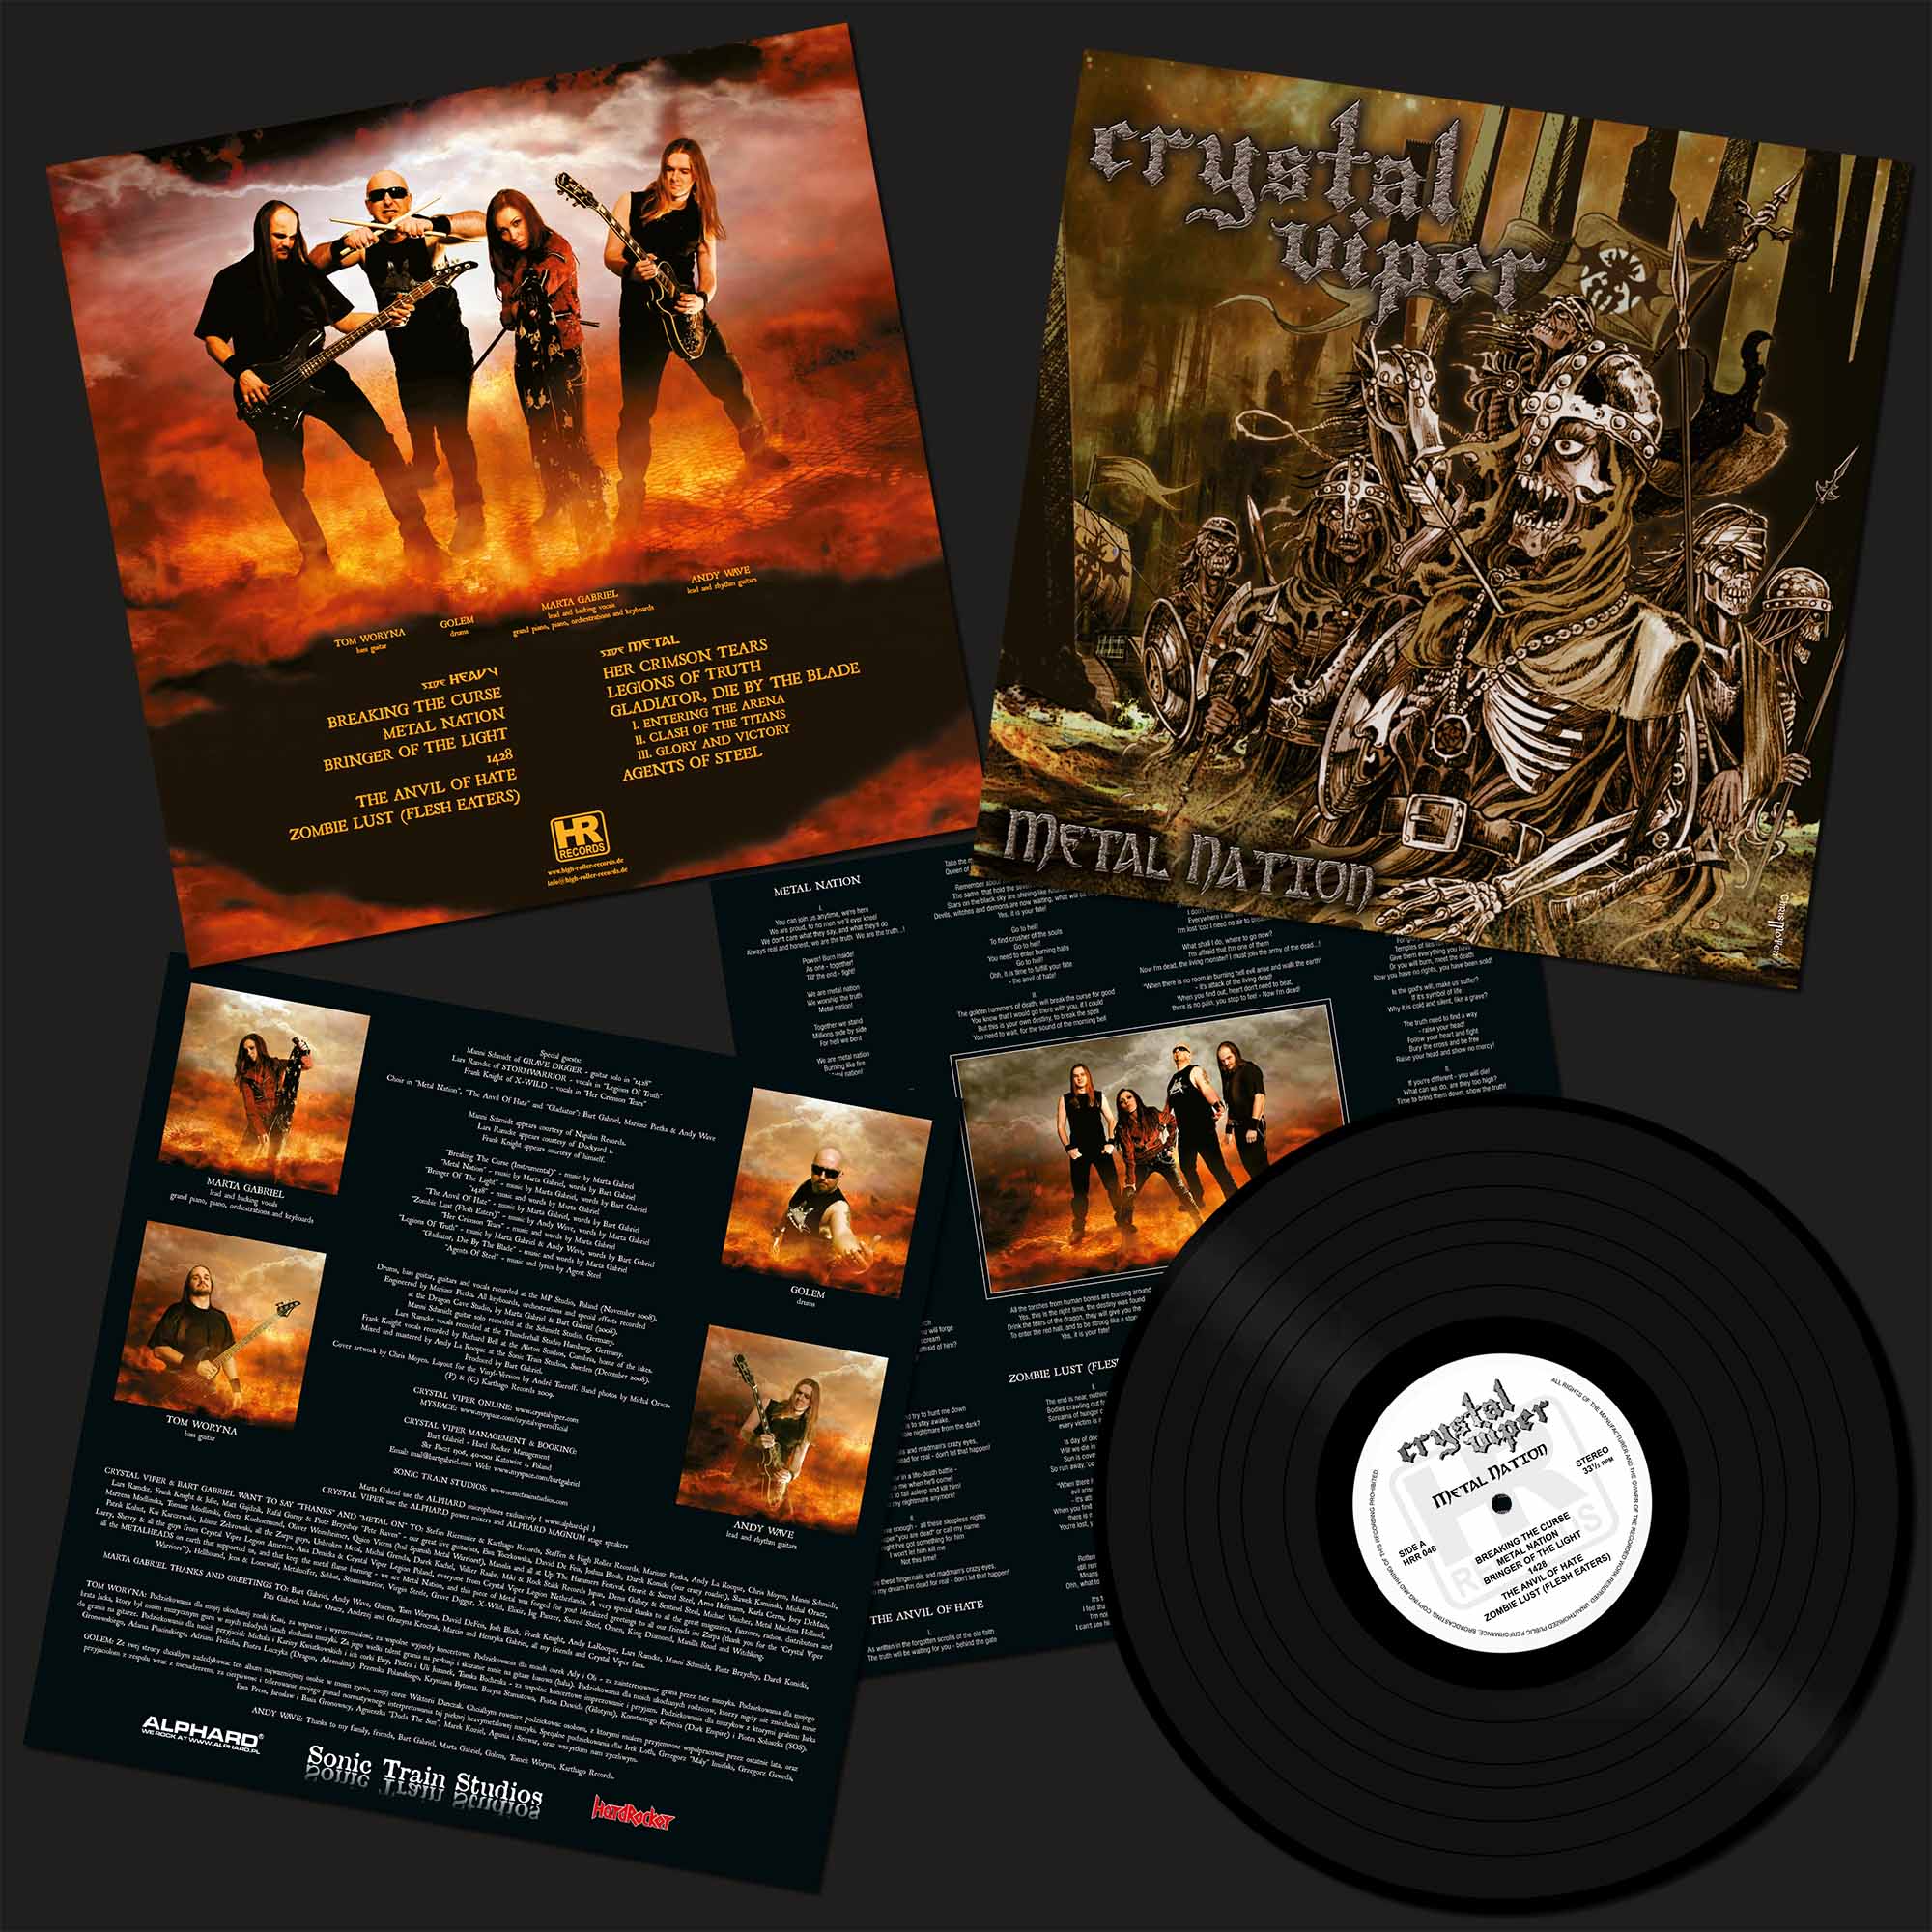 CRYSTAL VIPER - Metal Nation LP